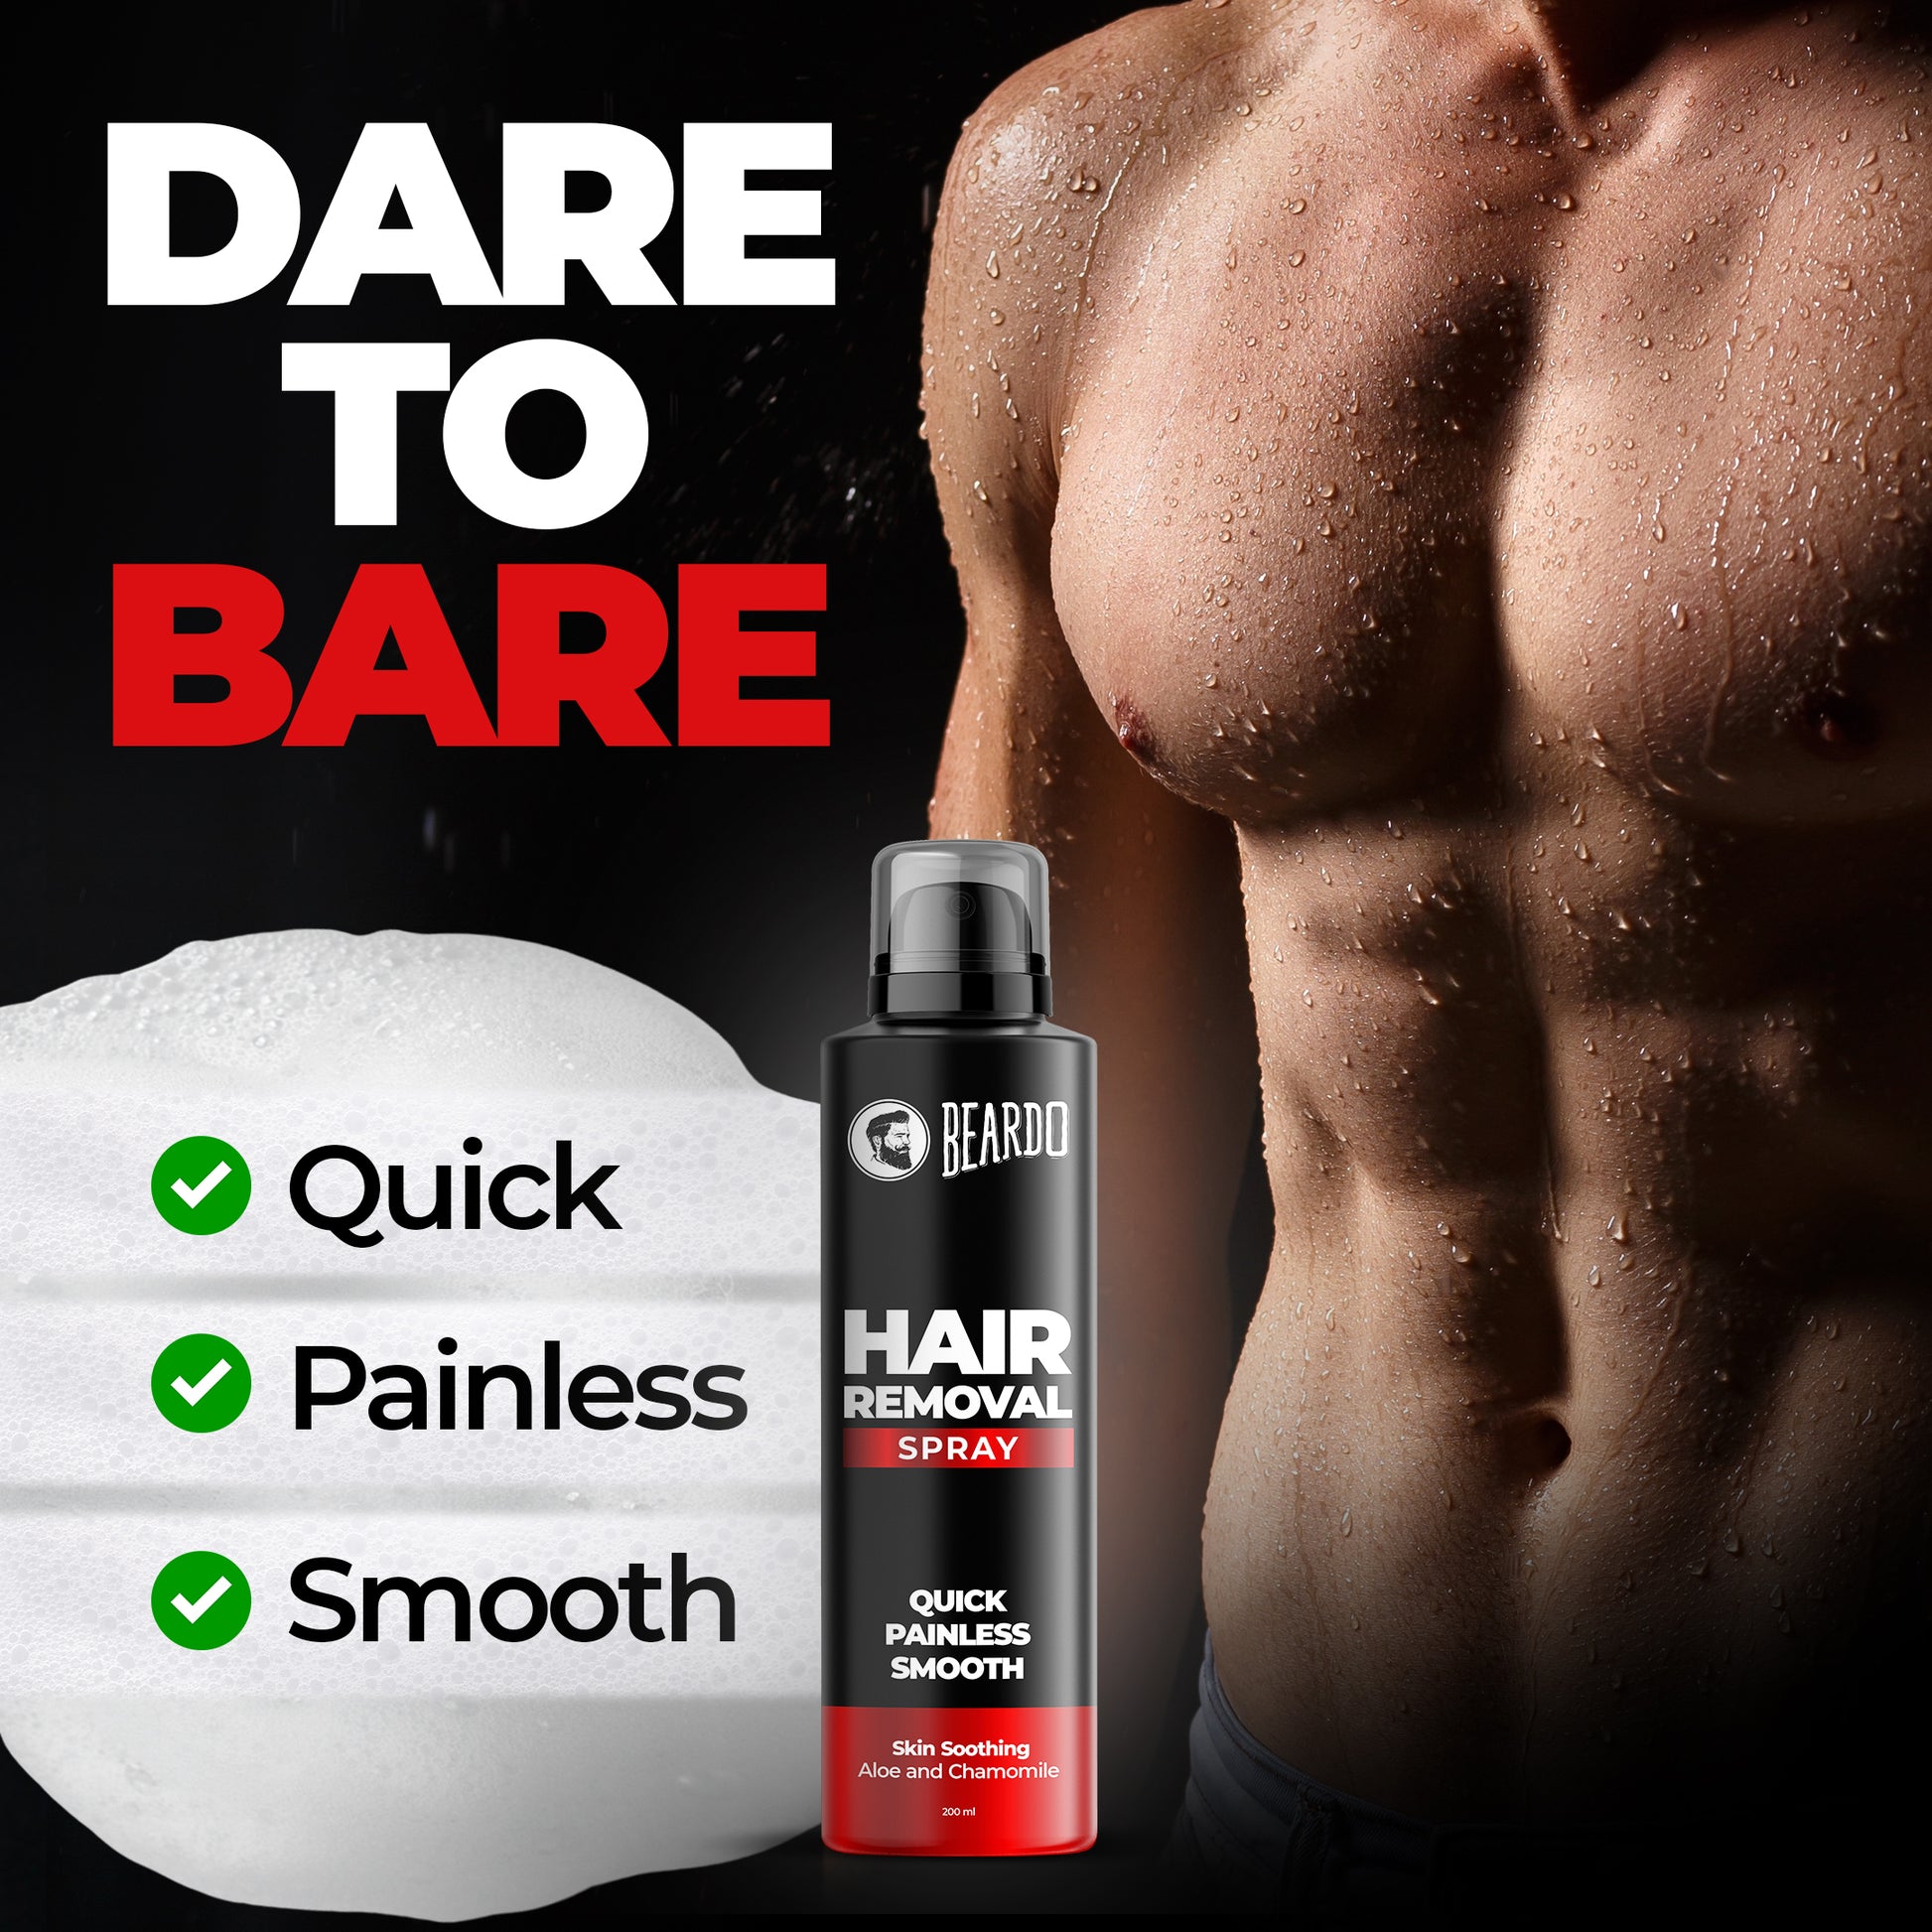 male body hair removal, men's body hair. painless hair removal for men